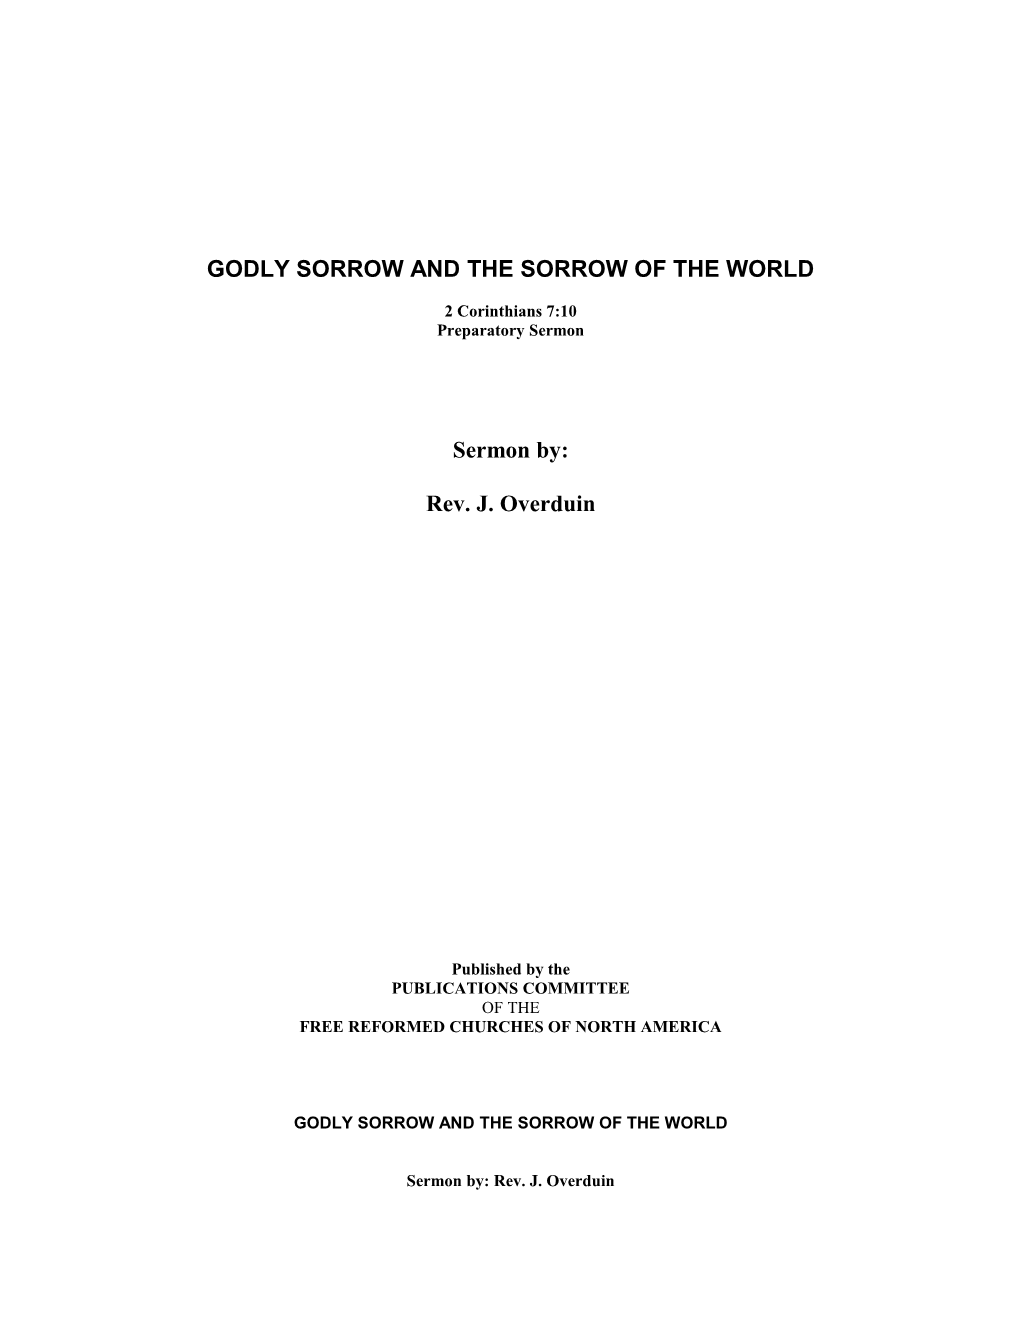 Godly Sorrow and the Sorrow of the World